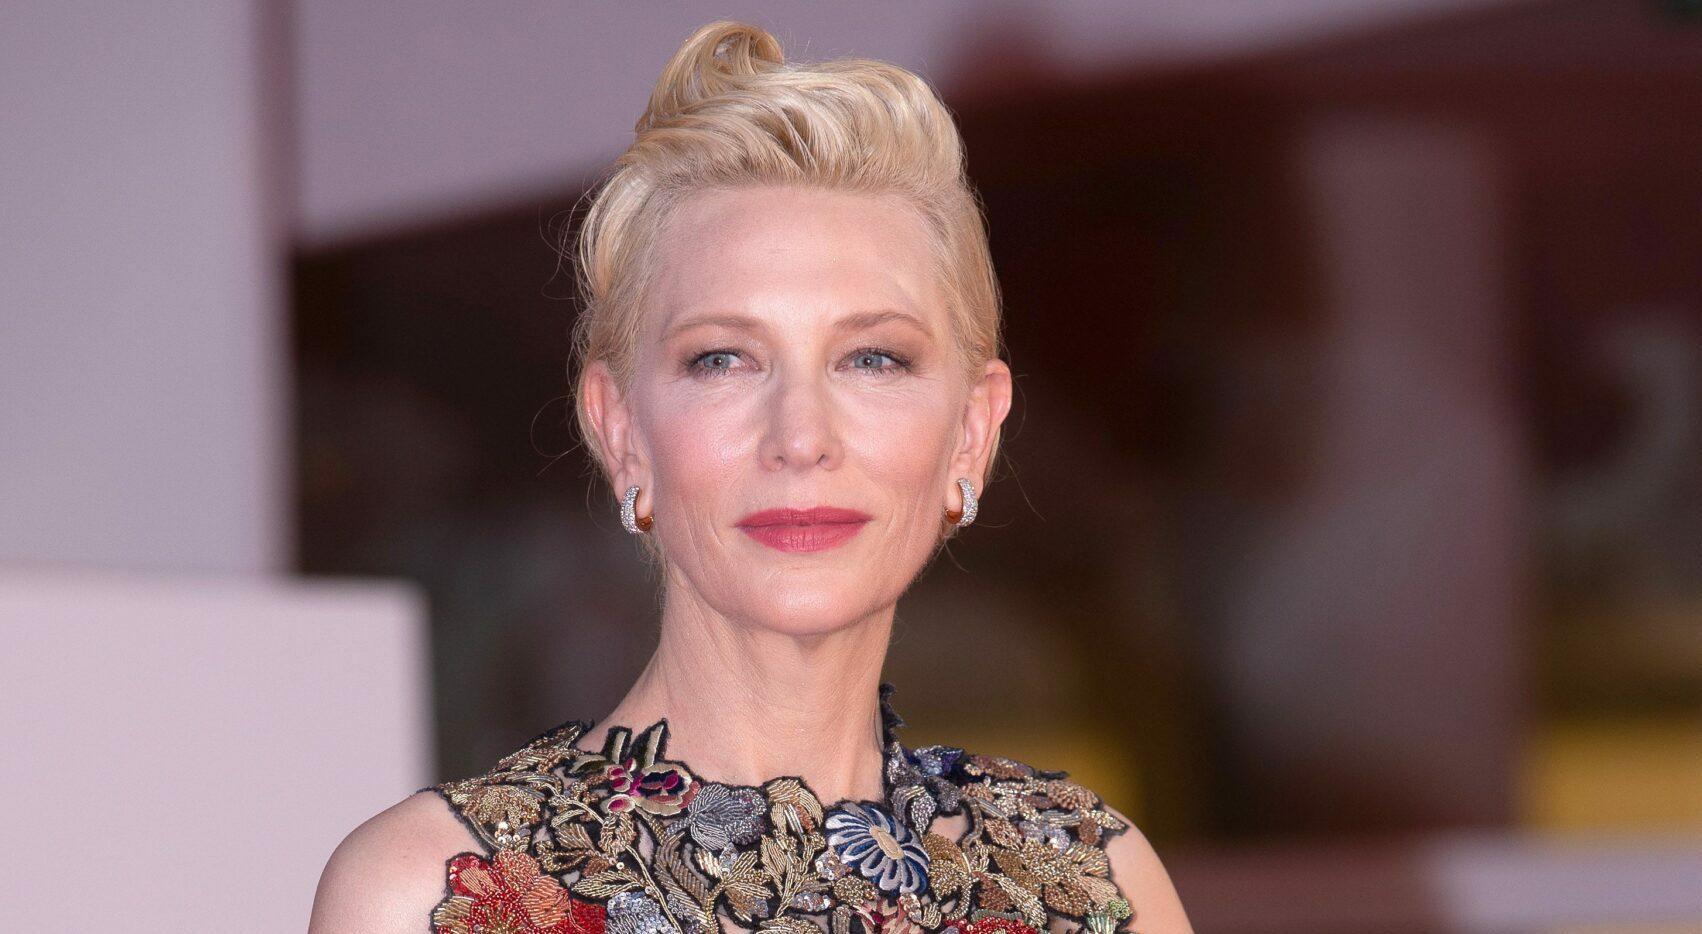 Lovers premiere 77th Venice International Film Festival - Cate Blanchett